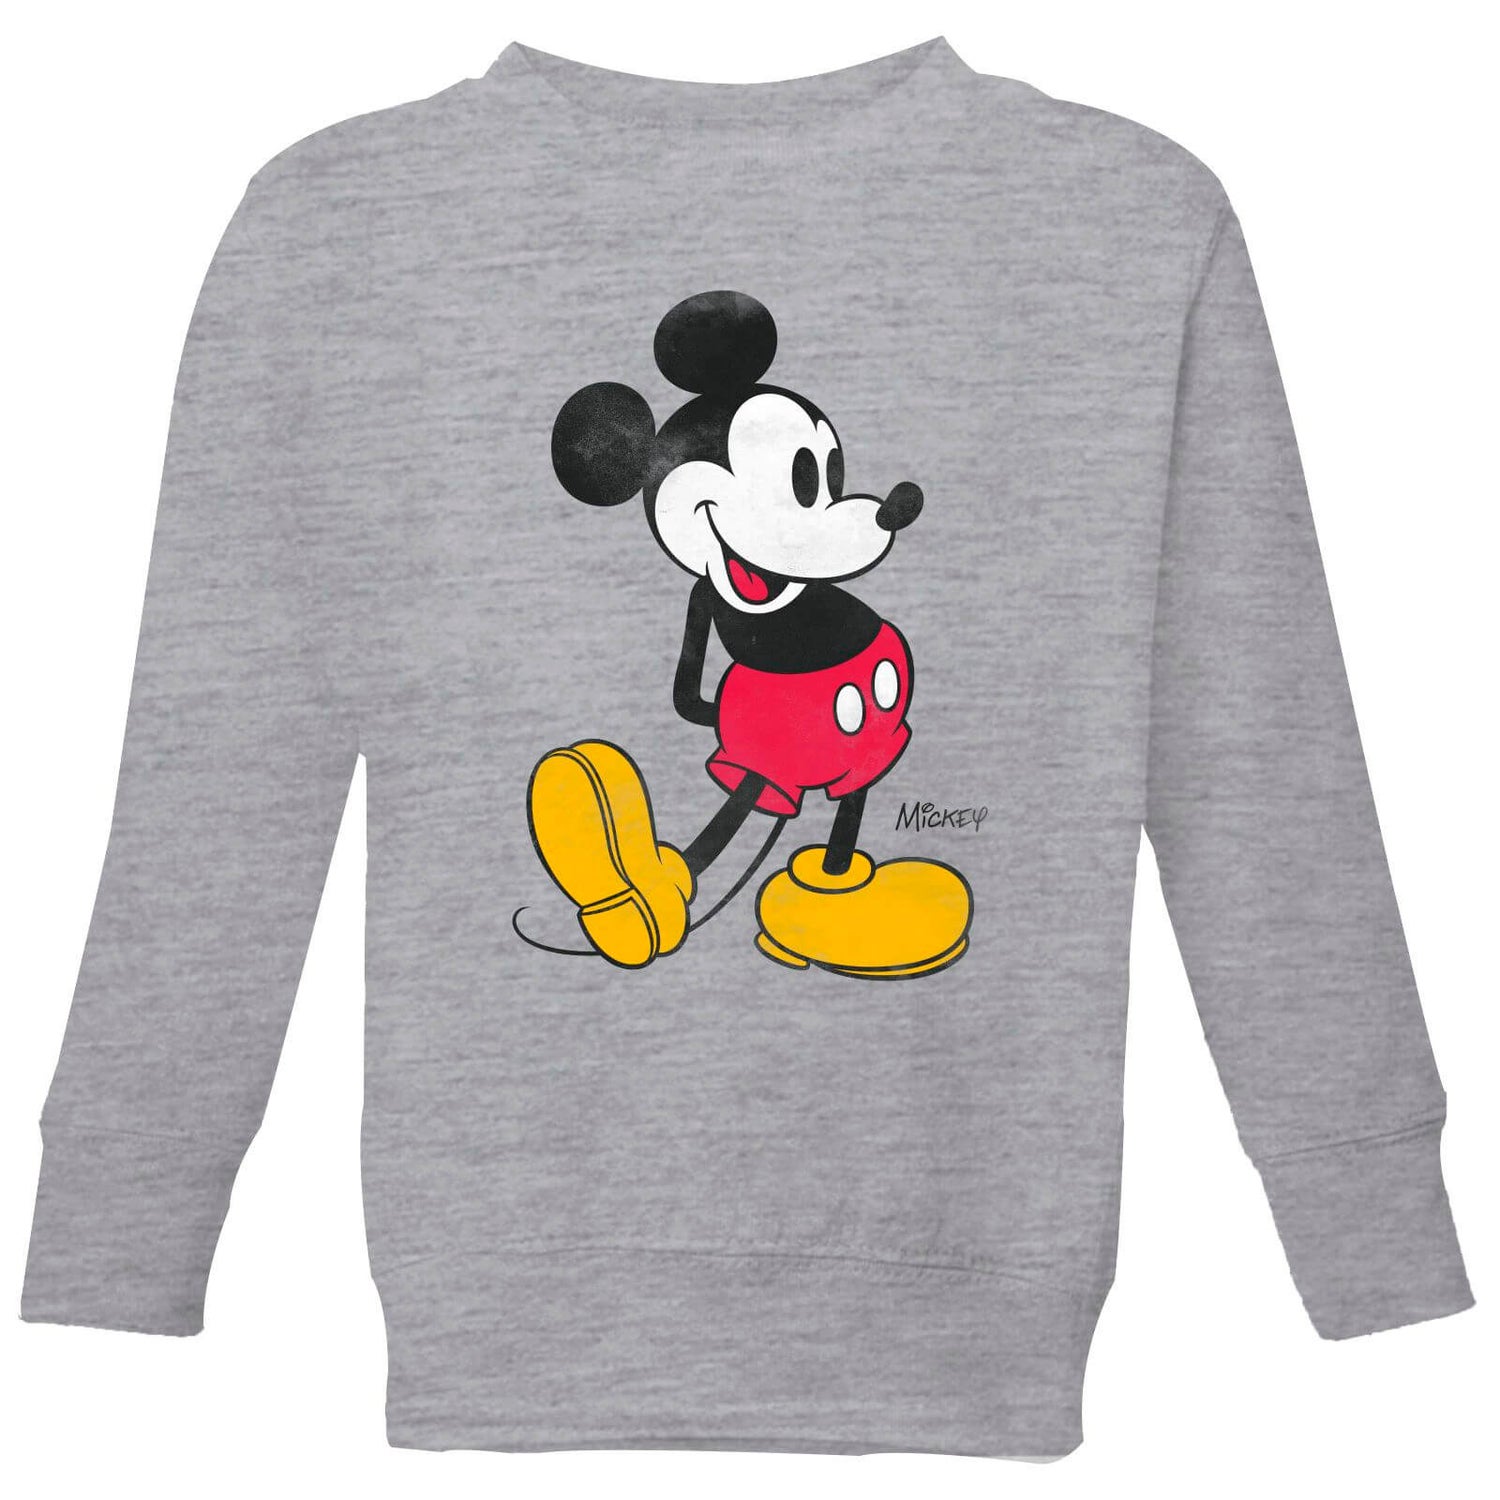 Disney Mickey Mouse Classic Kick Kids' Sweatshirt - Grey